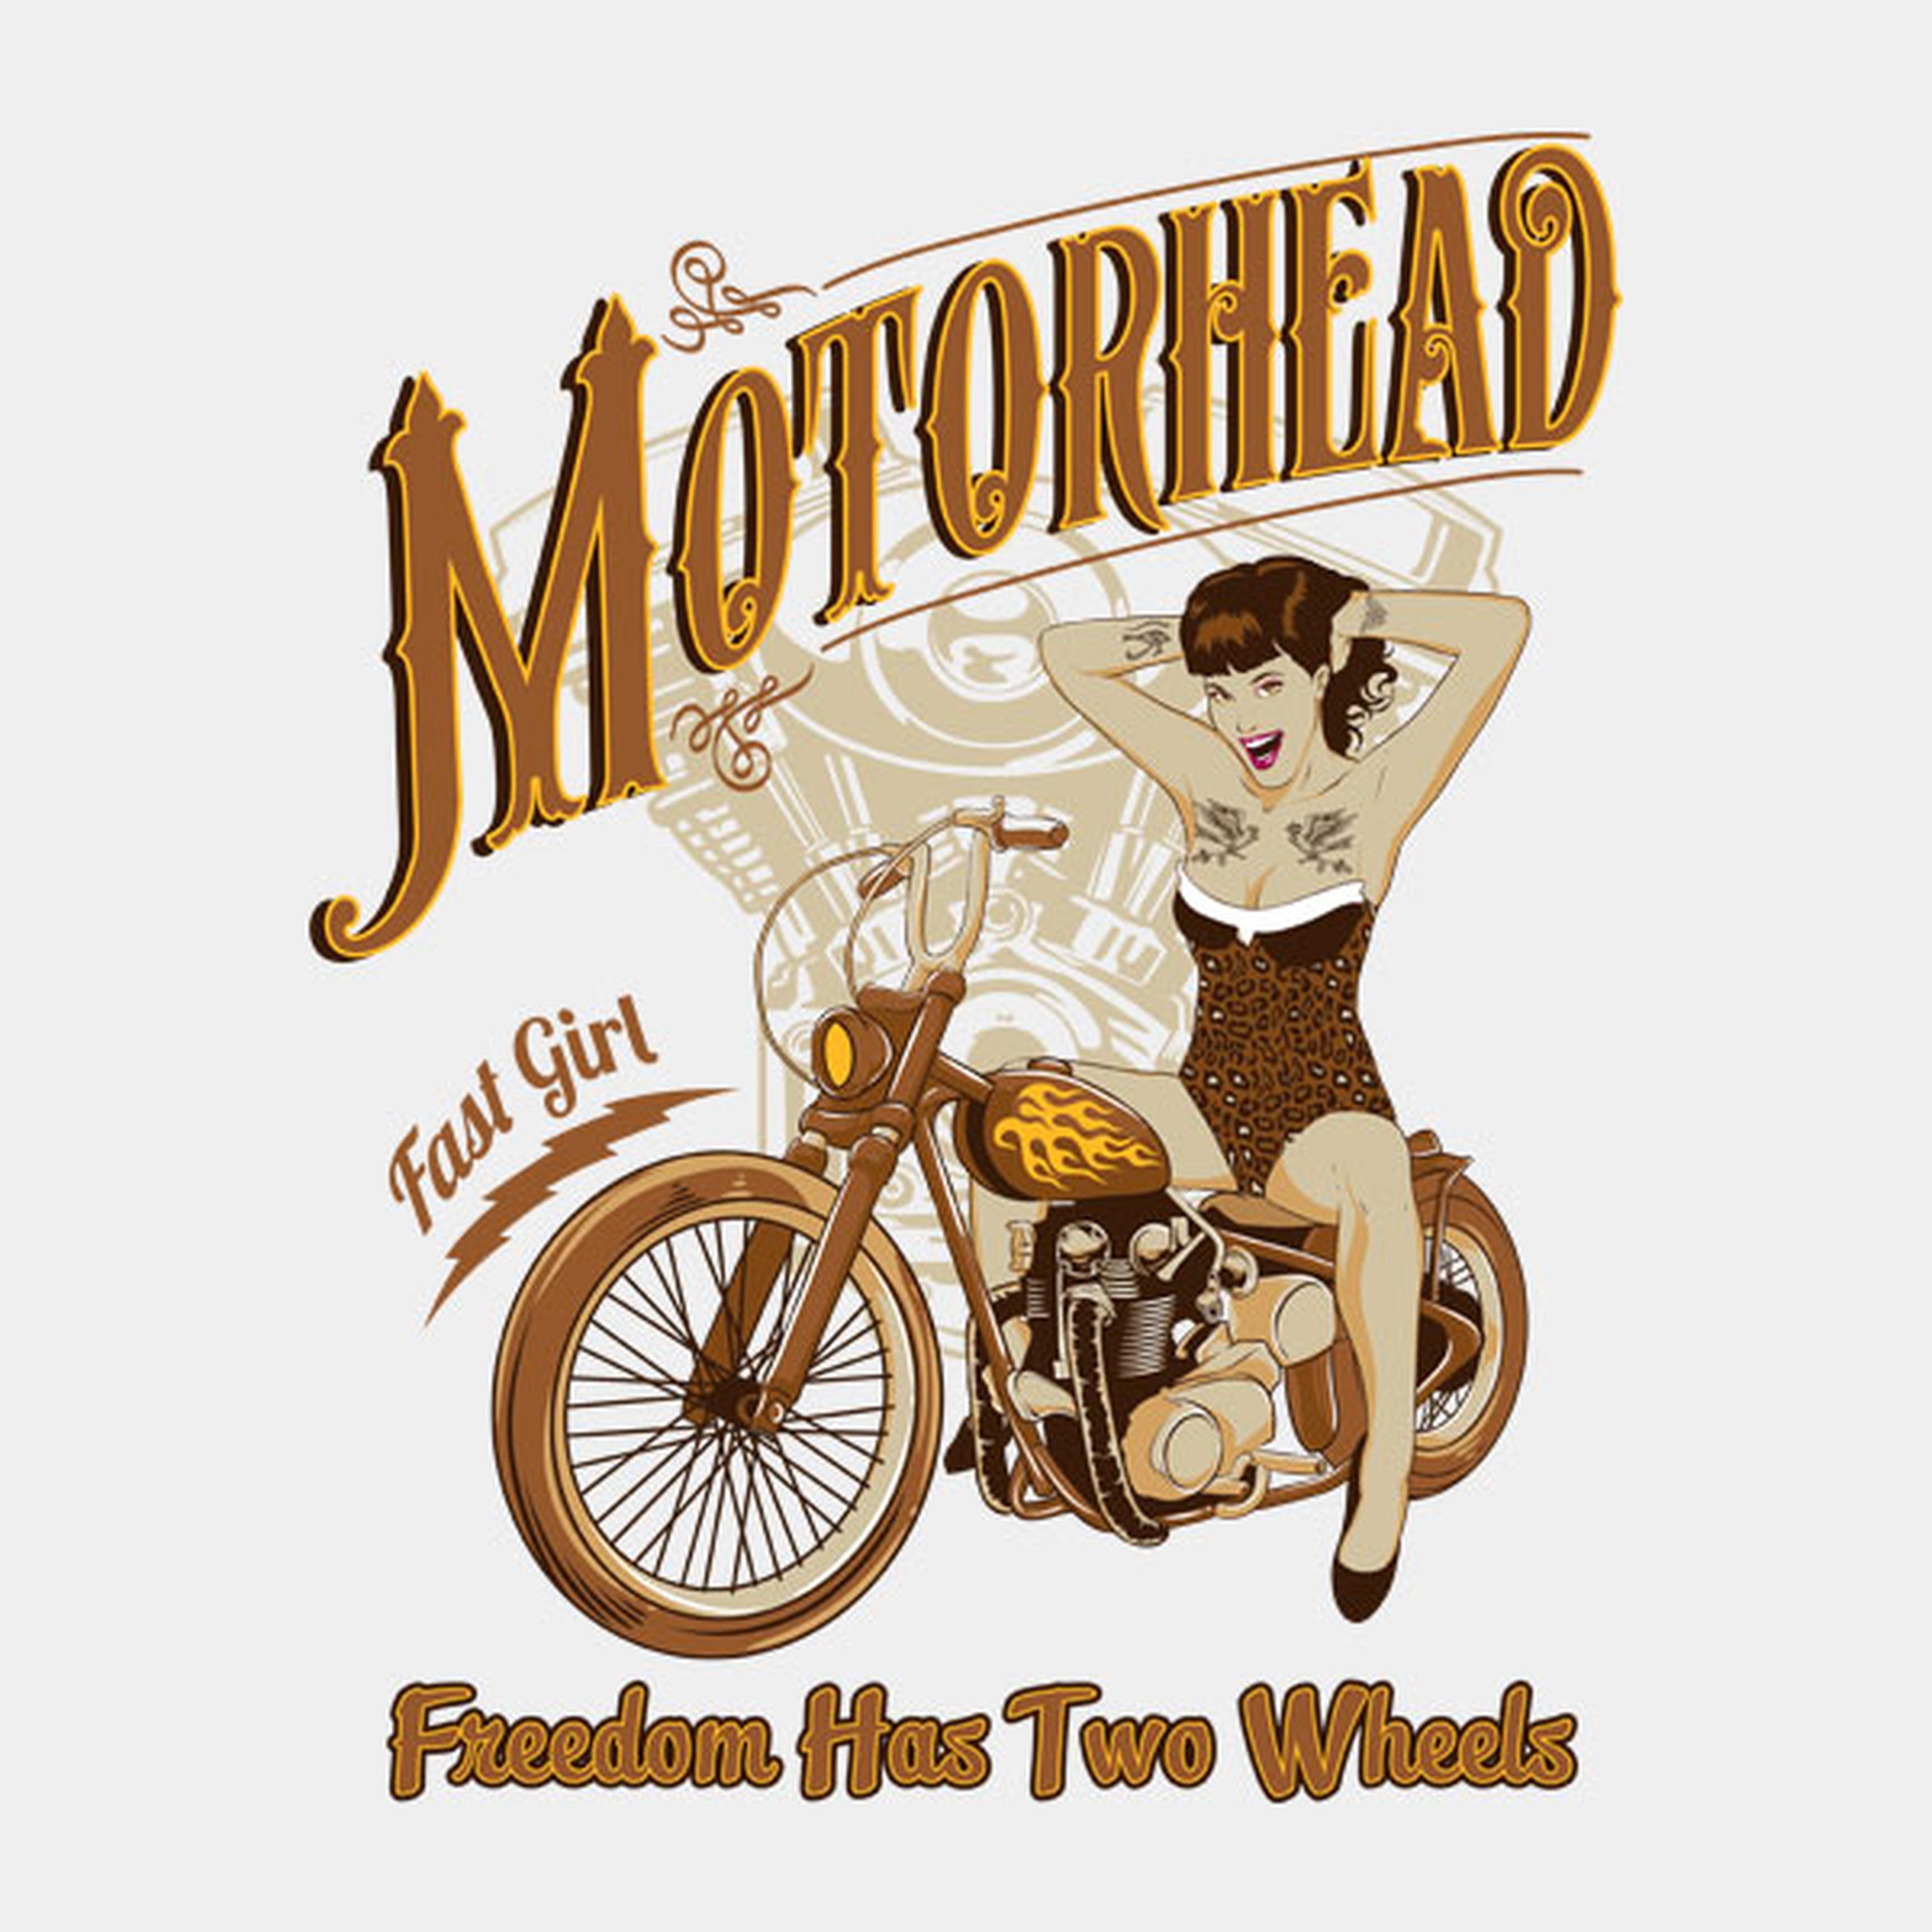 Motorhead - T-shirt